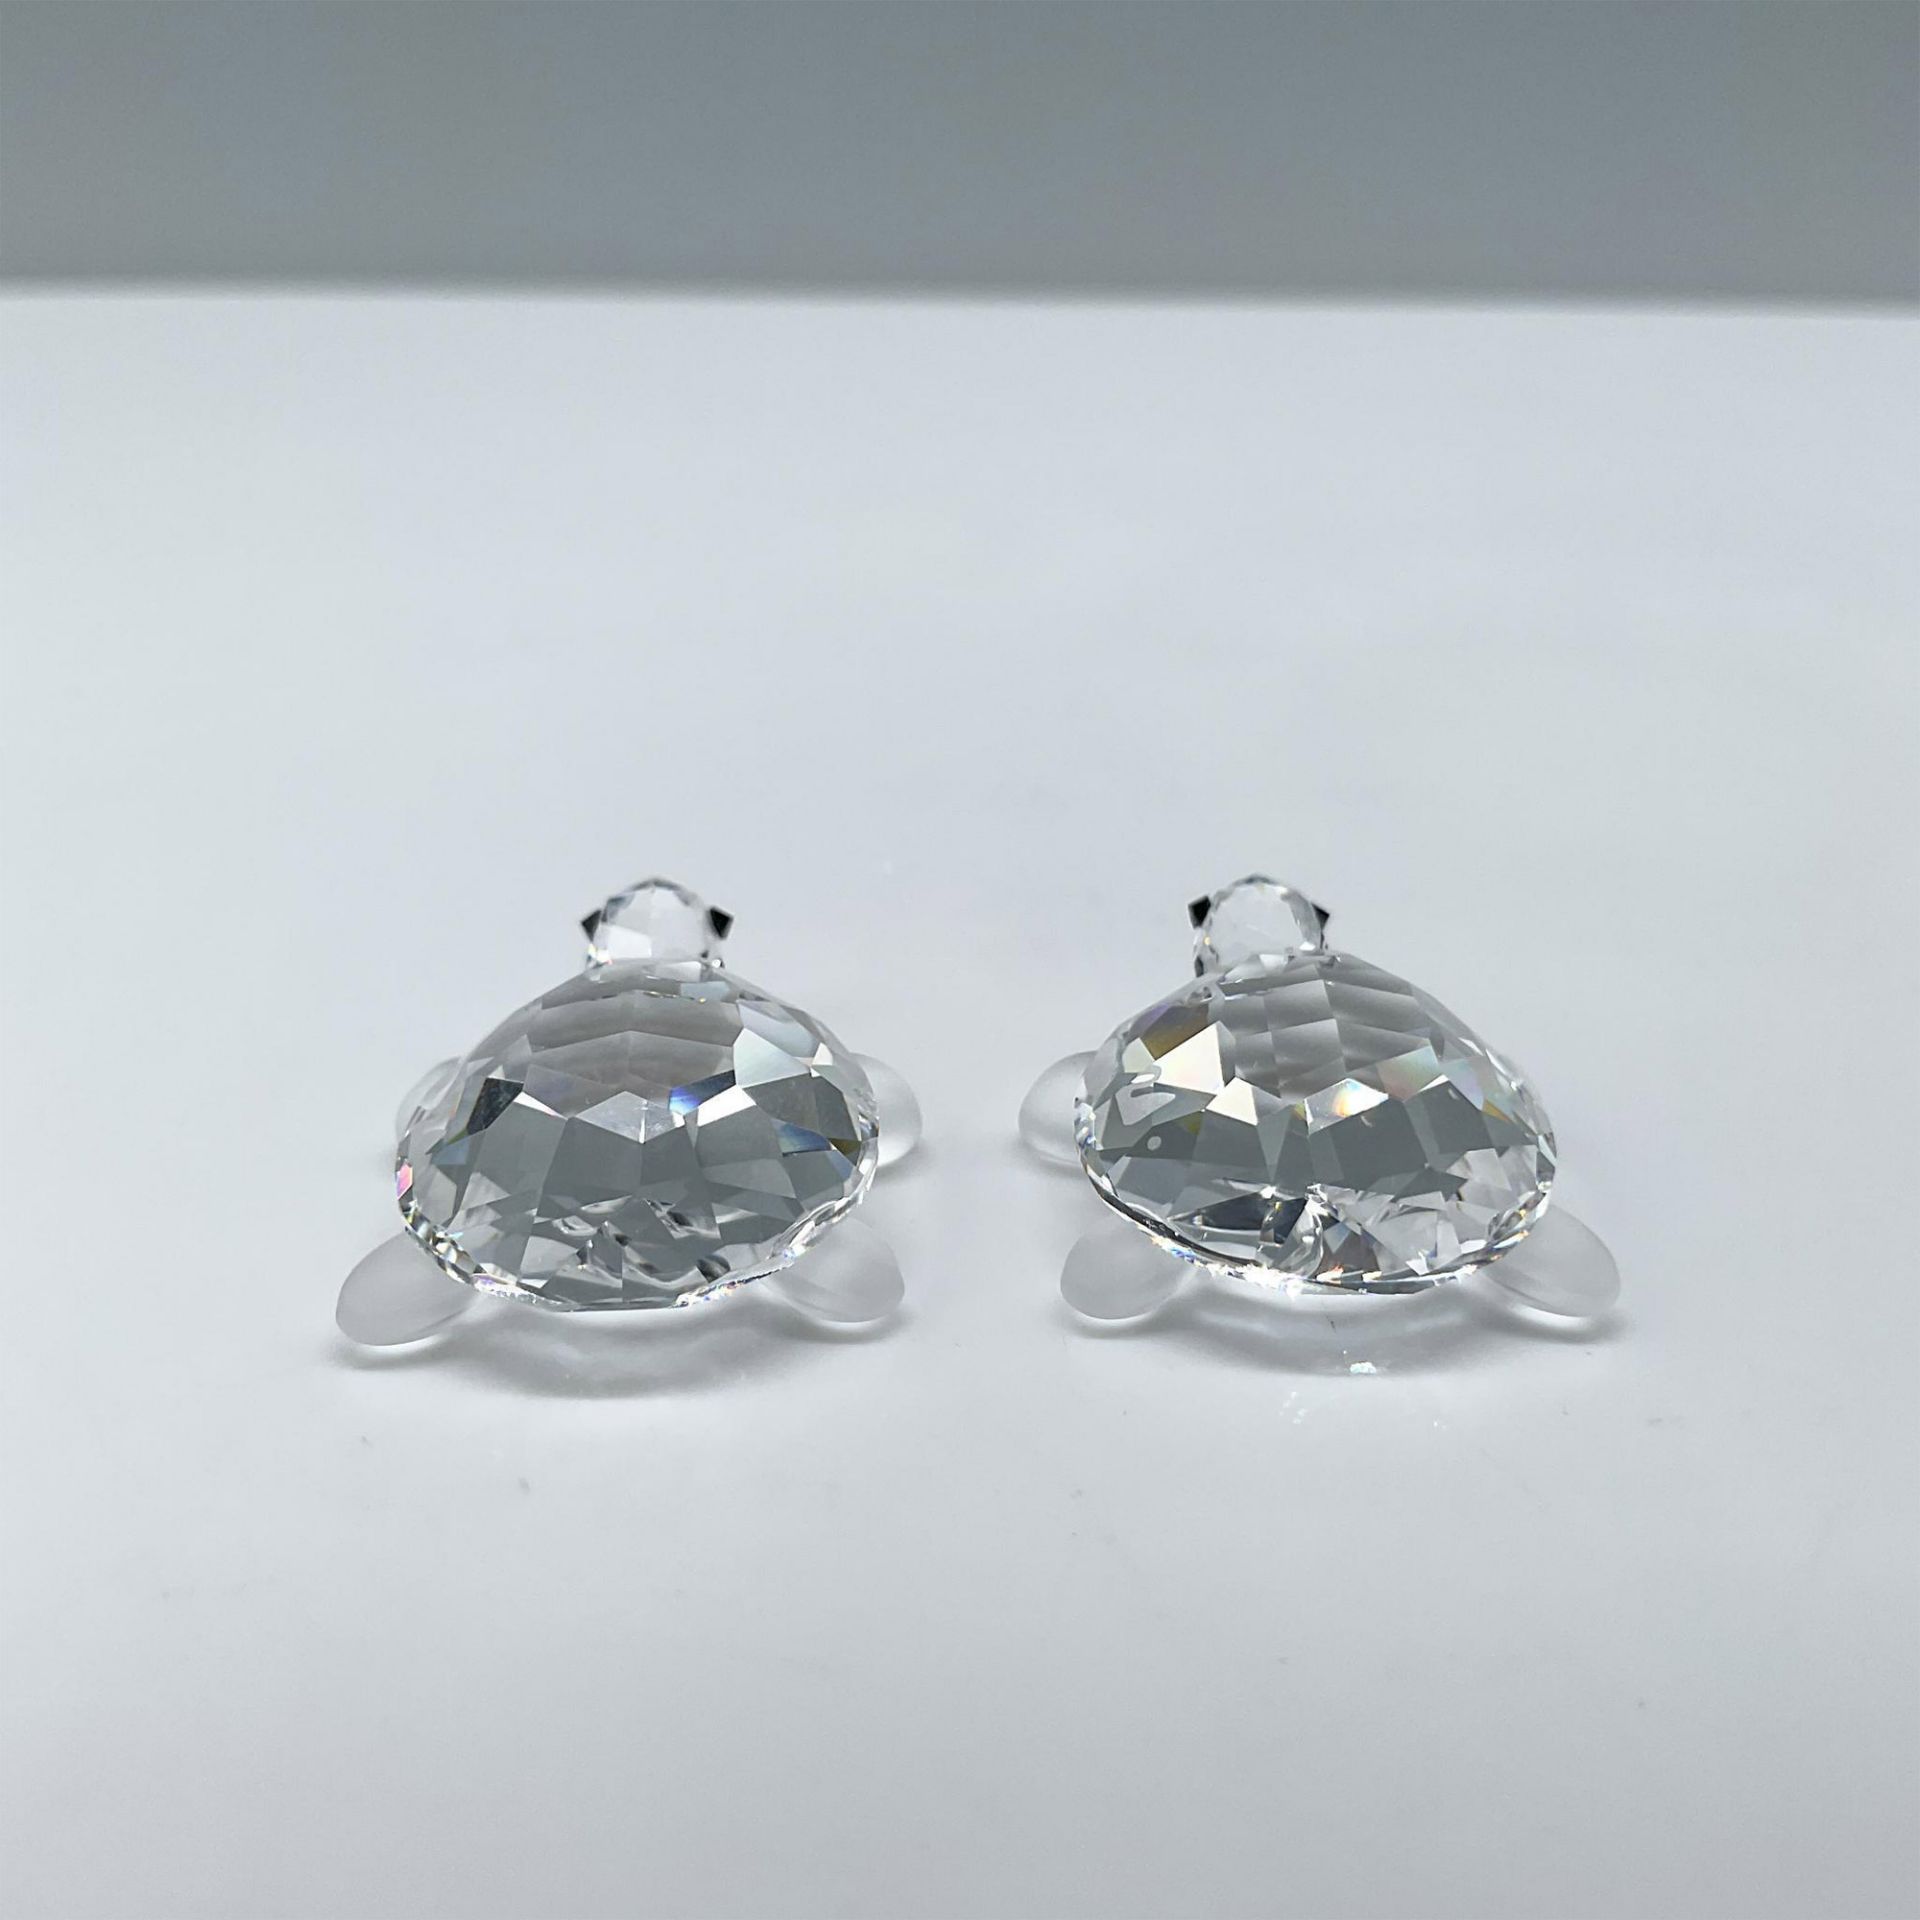 2pc Swarovski Crystal Miniatures, Baby Tortoises - Image 2 of 5